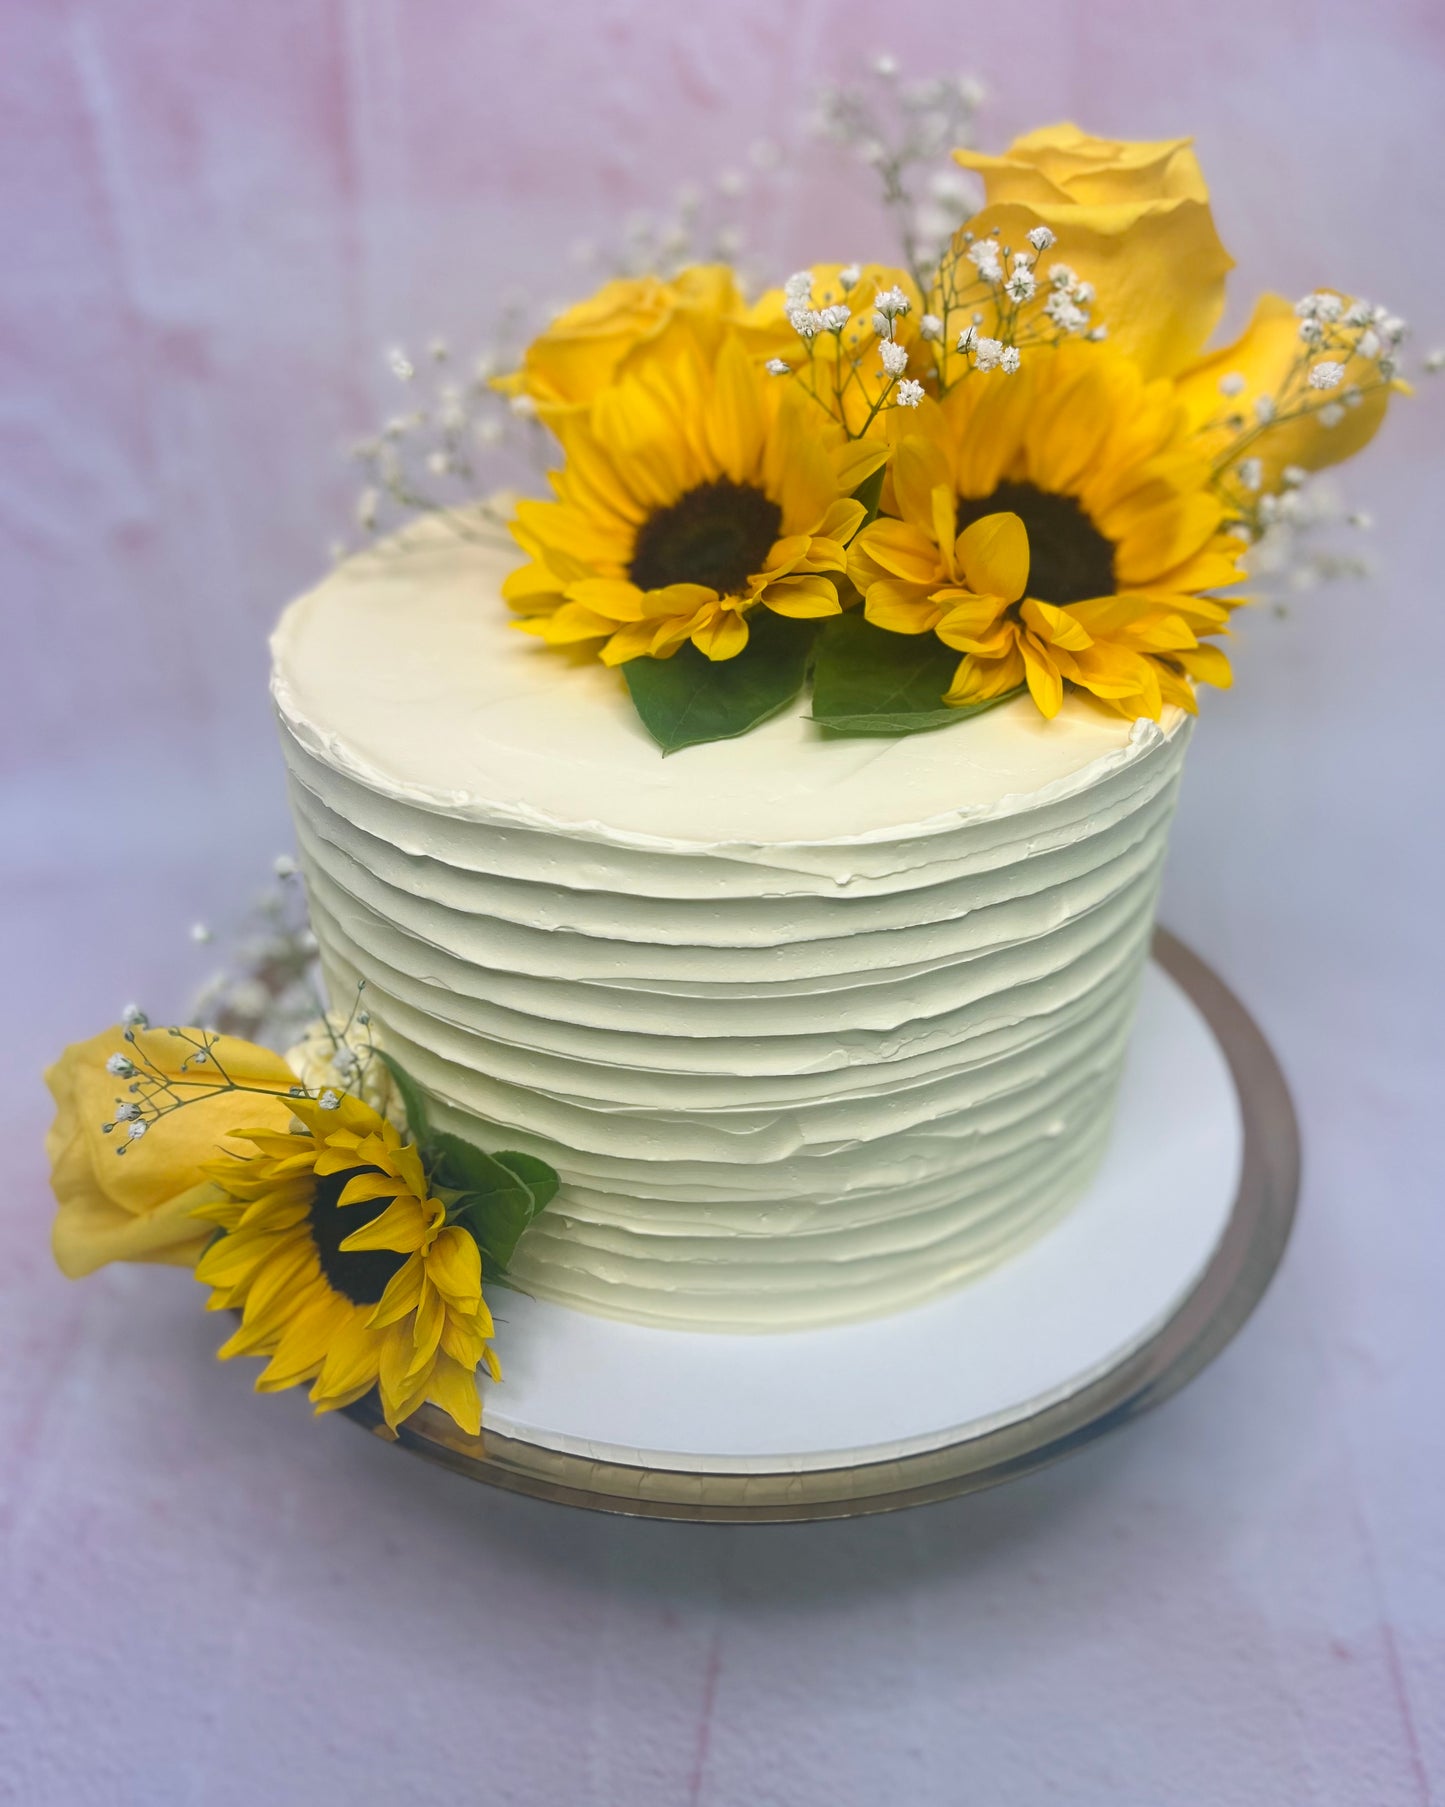 GF Wedding Cake